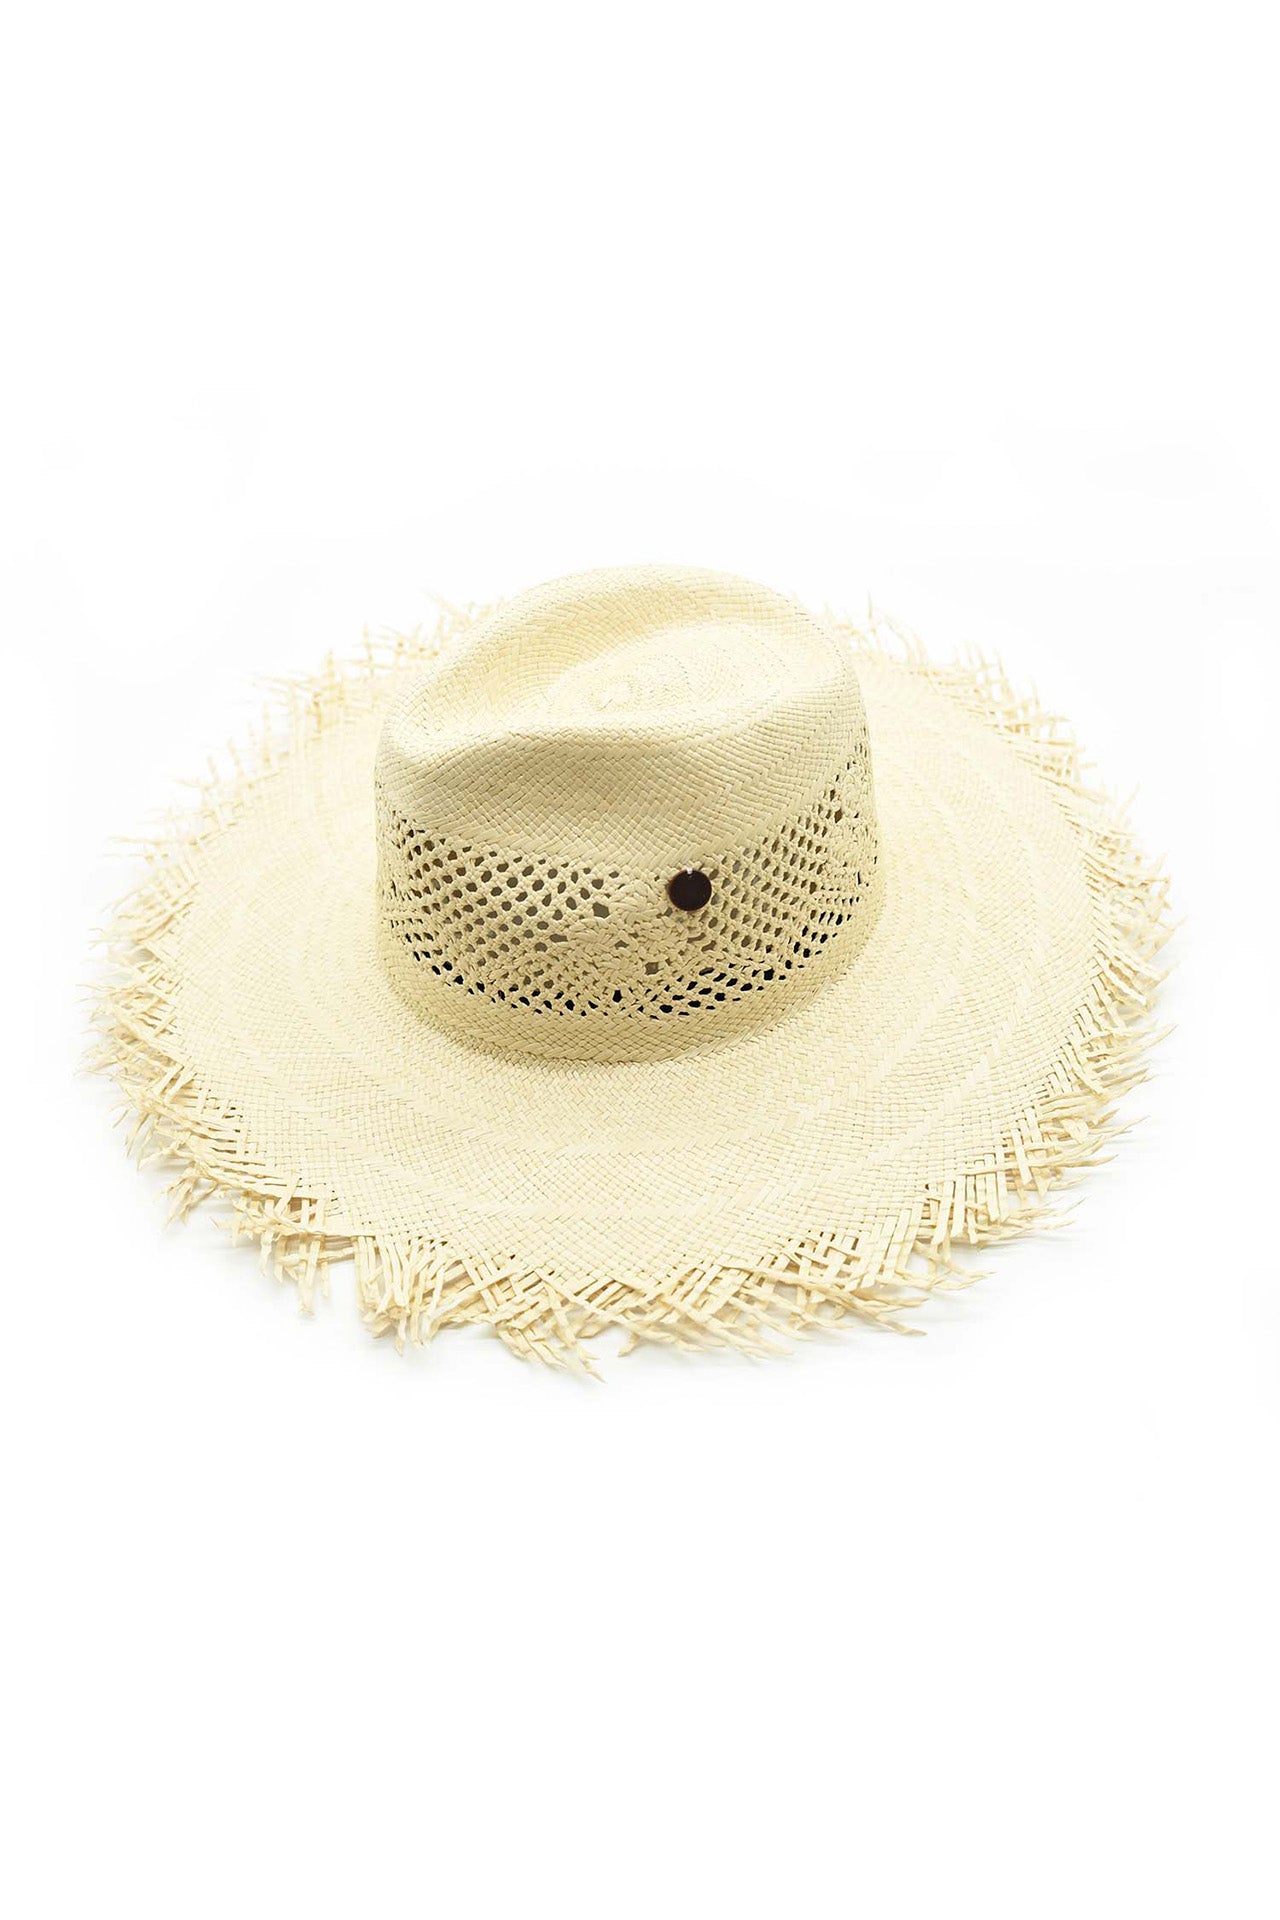 Trudy Frayed Genuine Panama Hat